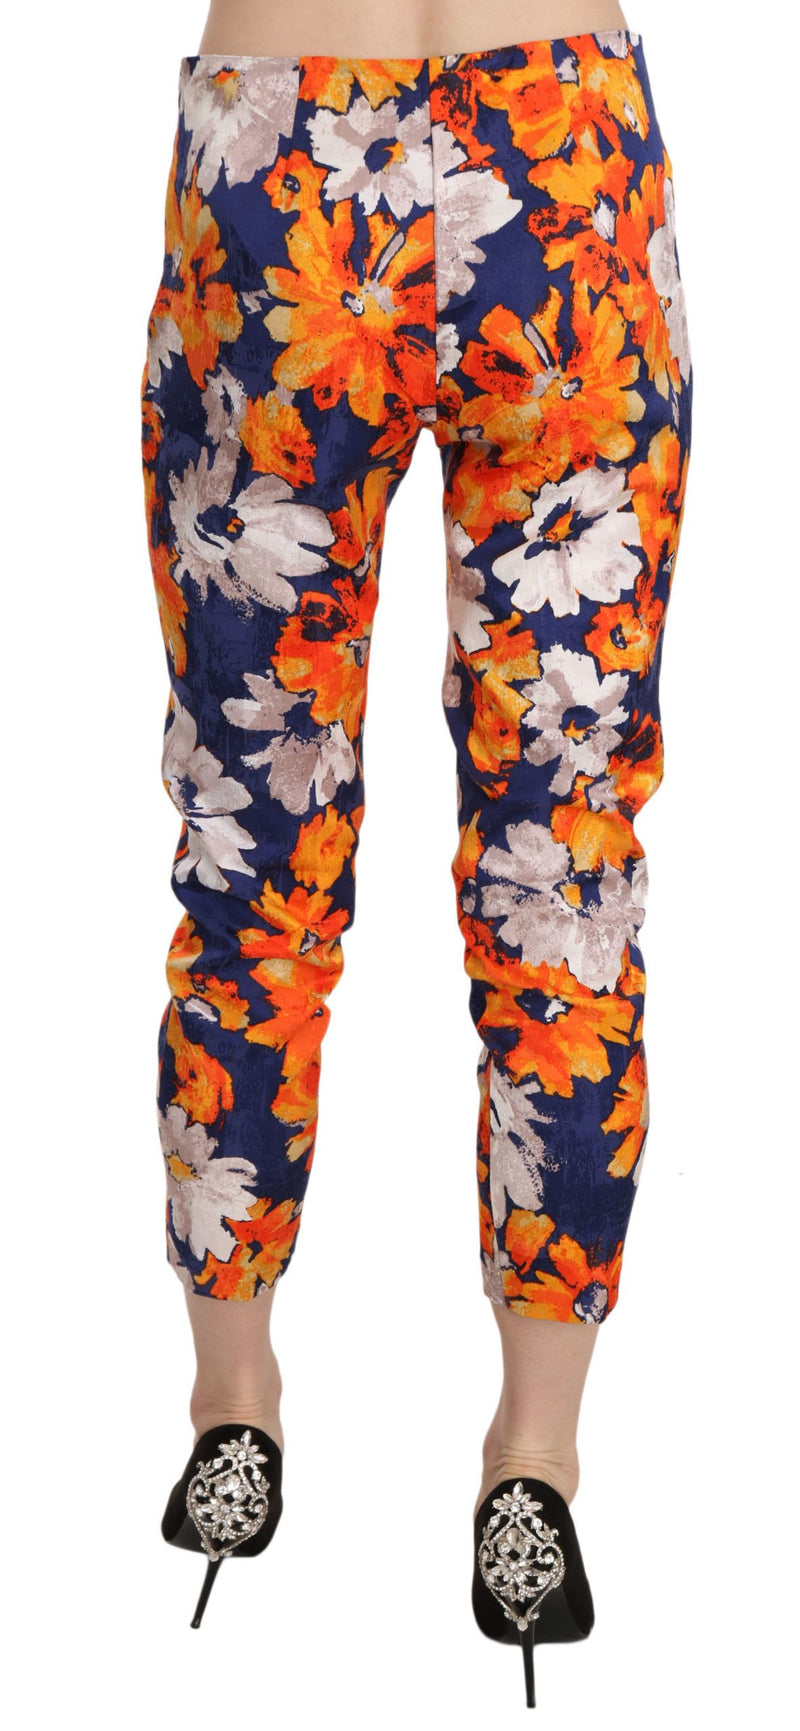 LANACAPRINA Floral Print Skinny Mid-Waist Women's Pants